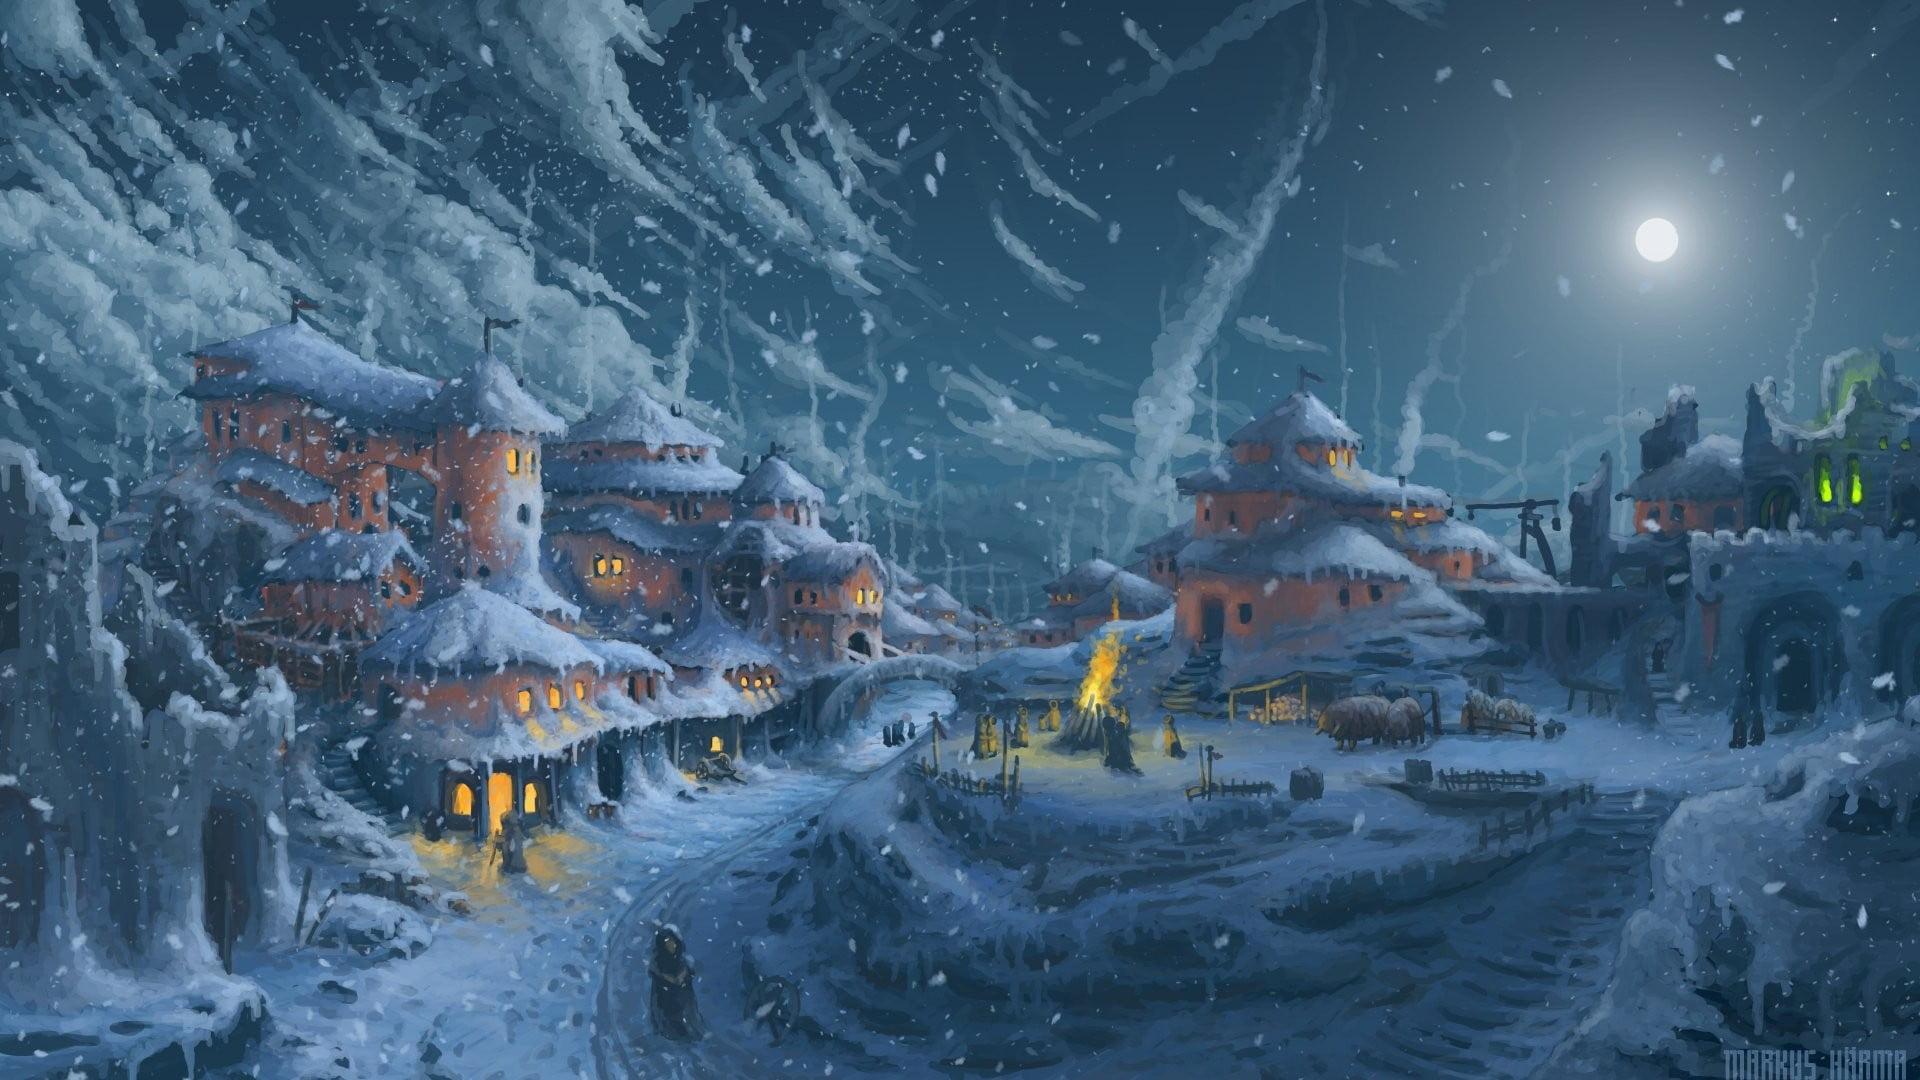 Snowy village illustration, artwork, painting, architecture